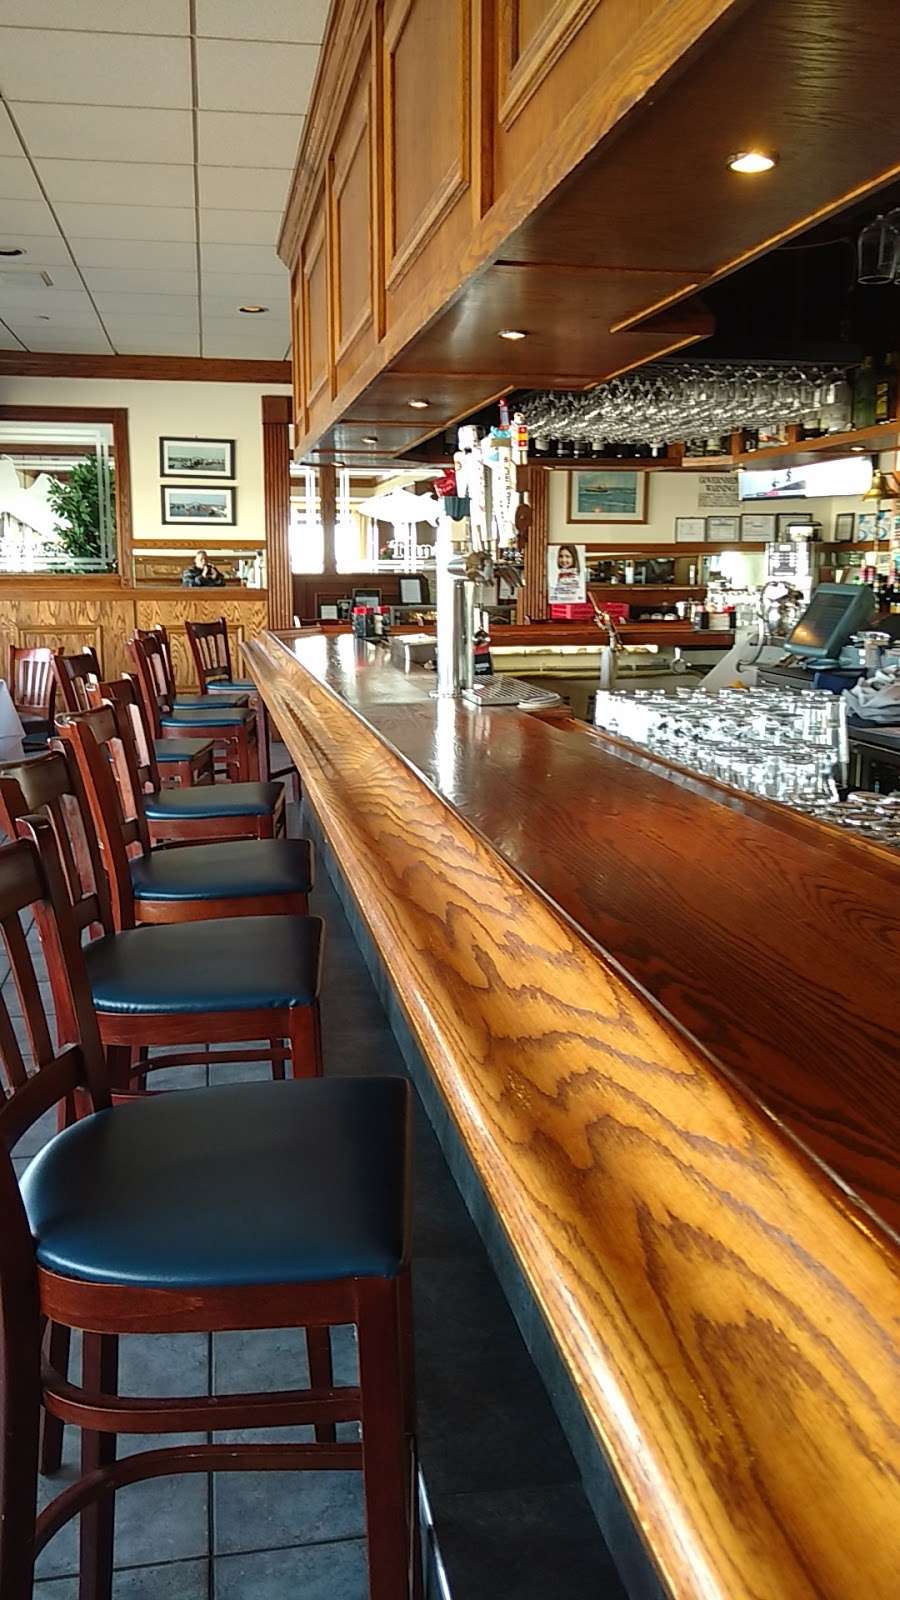 Captain Bills Restaurant & Catering - restaurant  | Photo 5 of 10 | Address: 122 Ocean Ave, Bay Shore, NY 11706, USA | Phone: (631) 665-6262